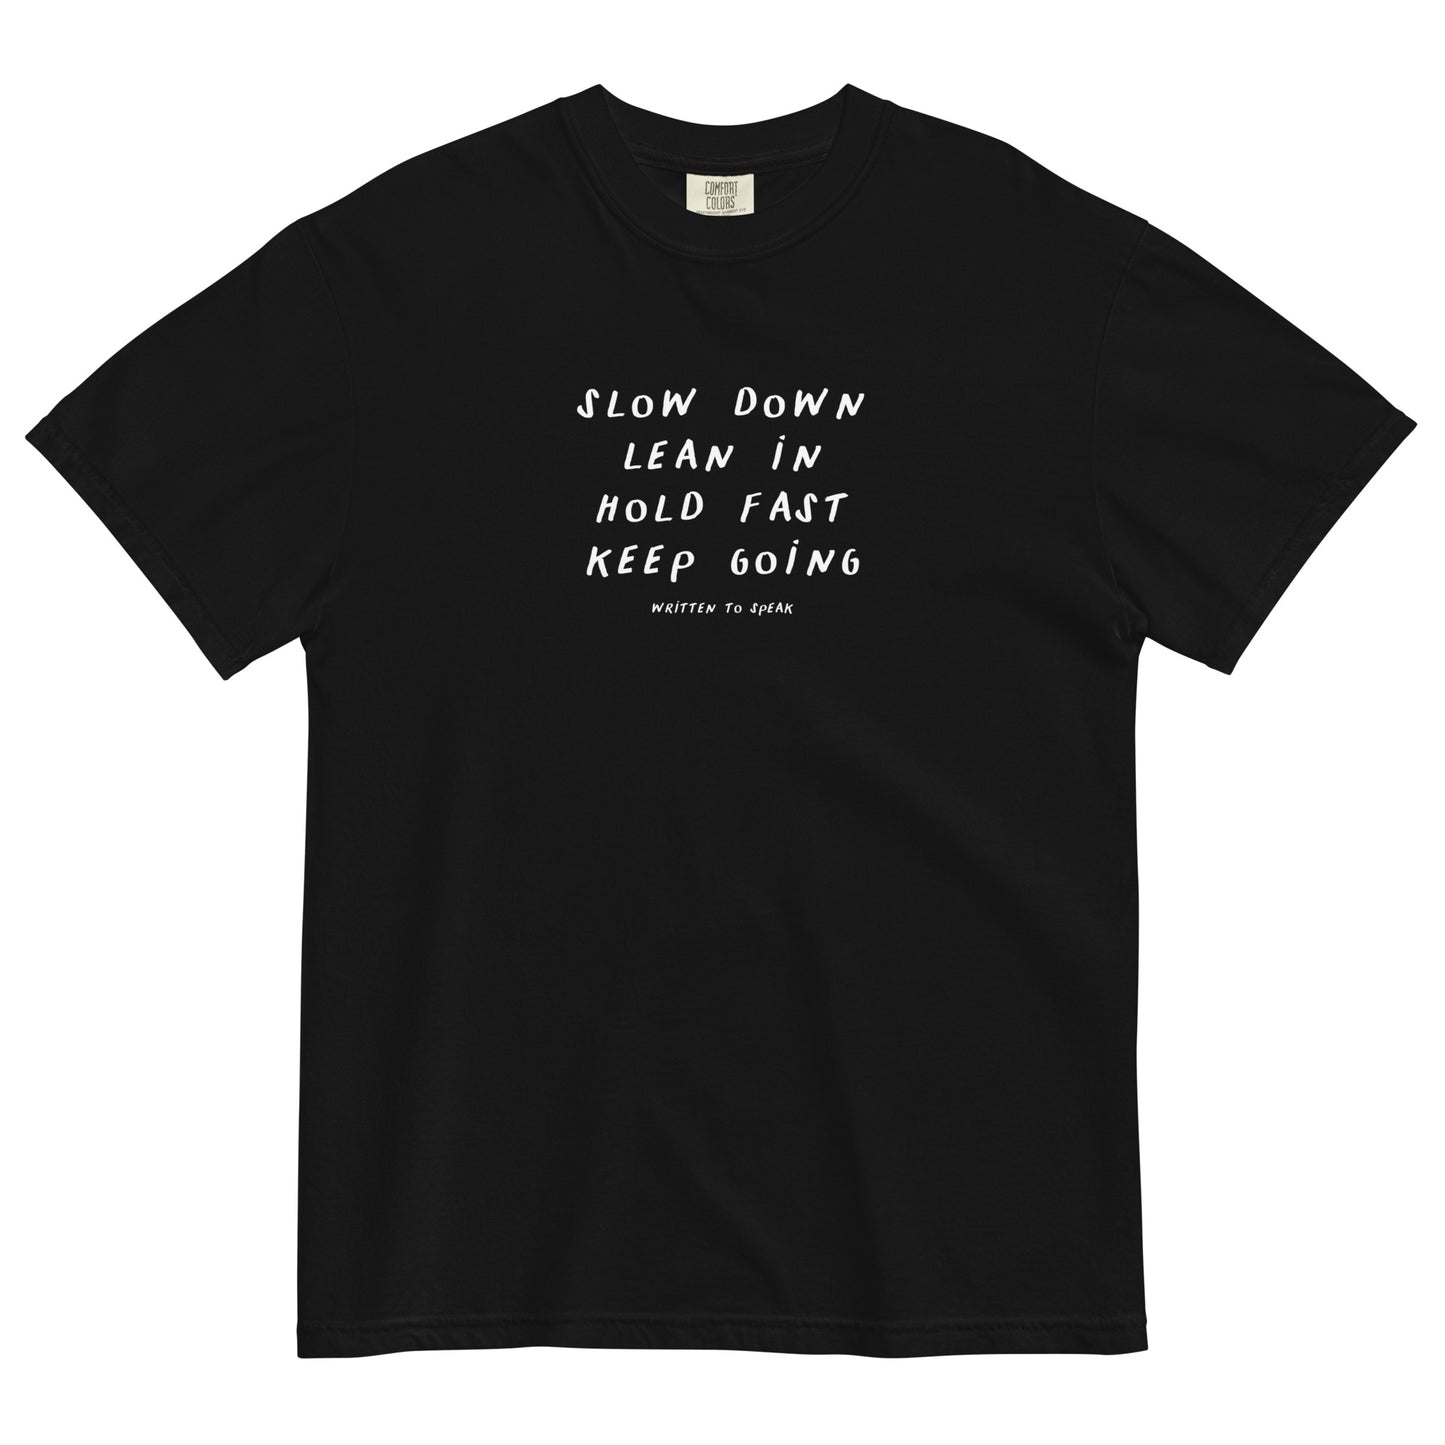 4 Things - Unisex heavyweight t-shirt